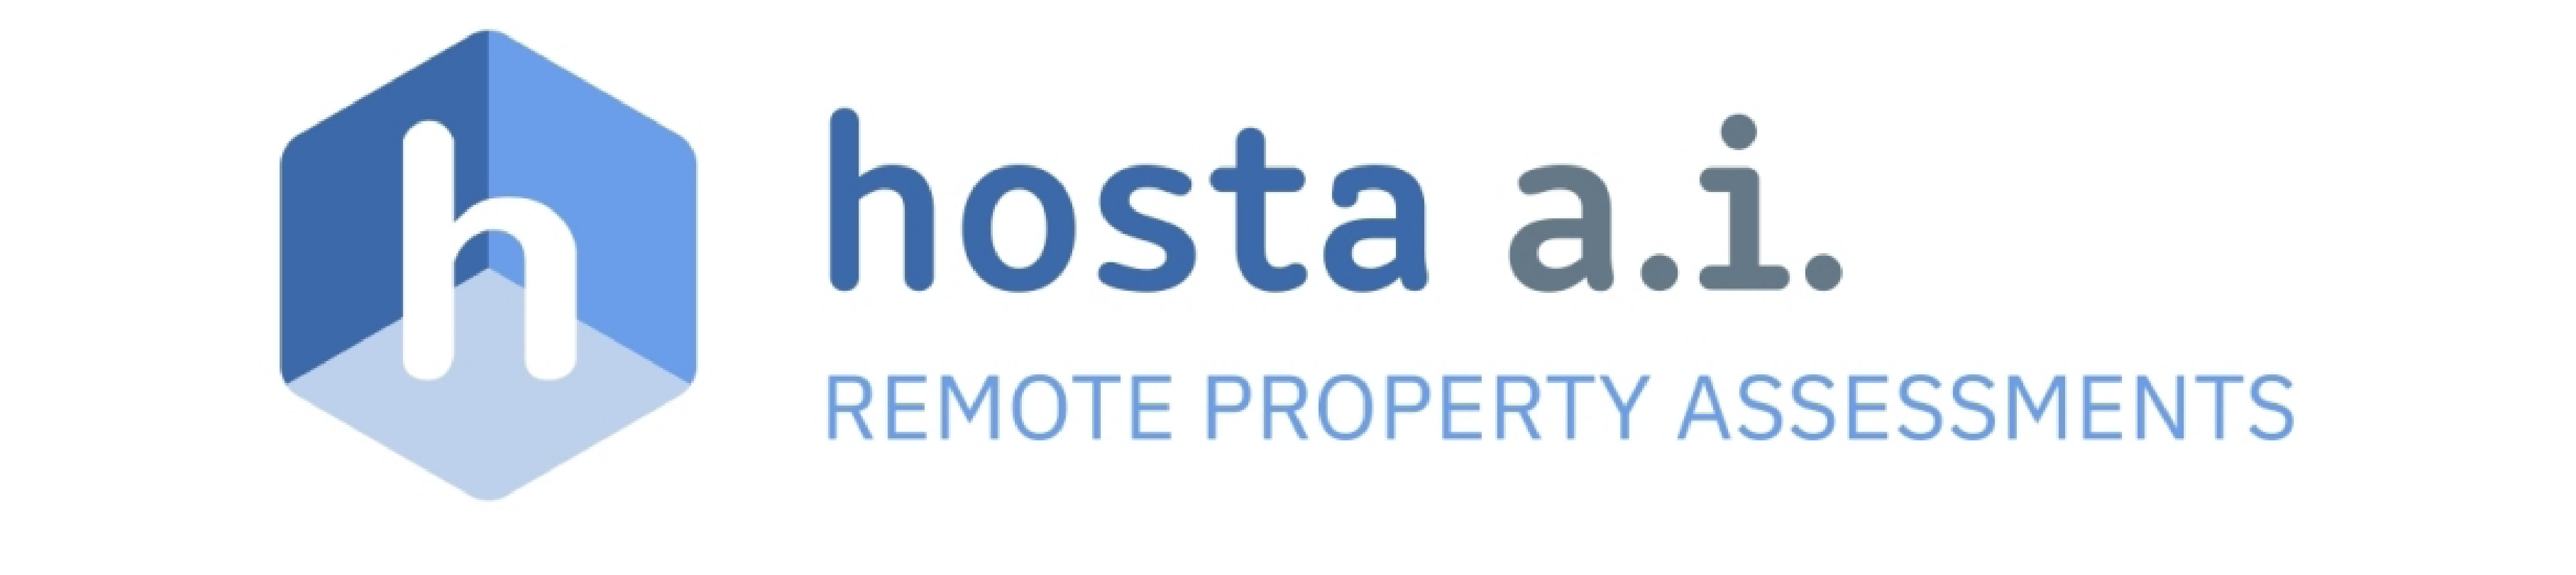 Hosta AI logo with tagline "remote property assessments" 